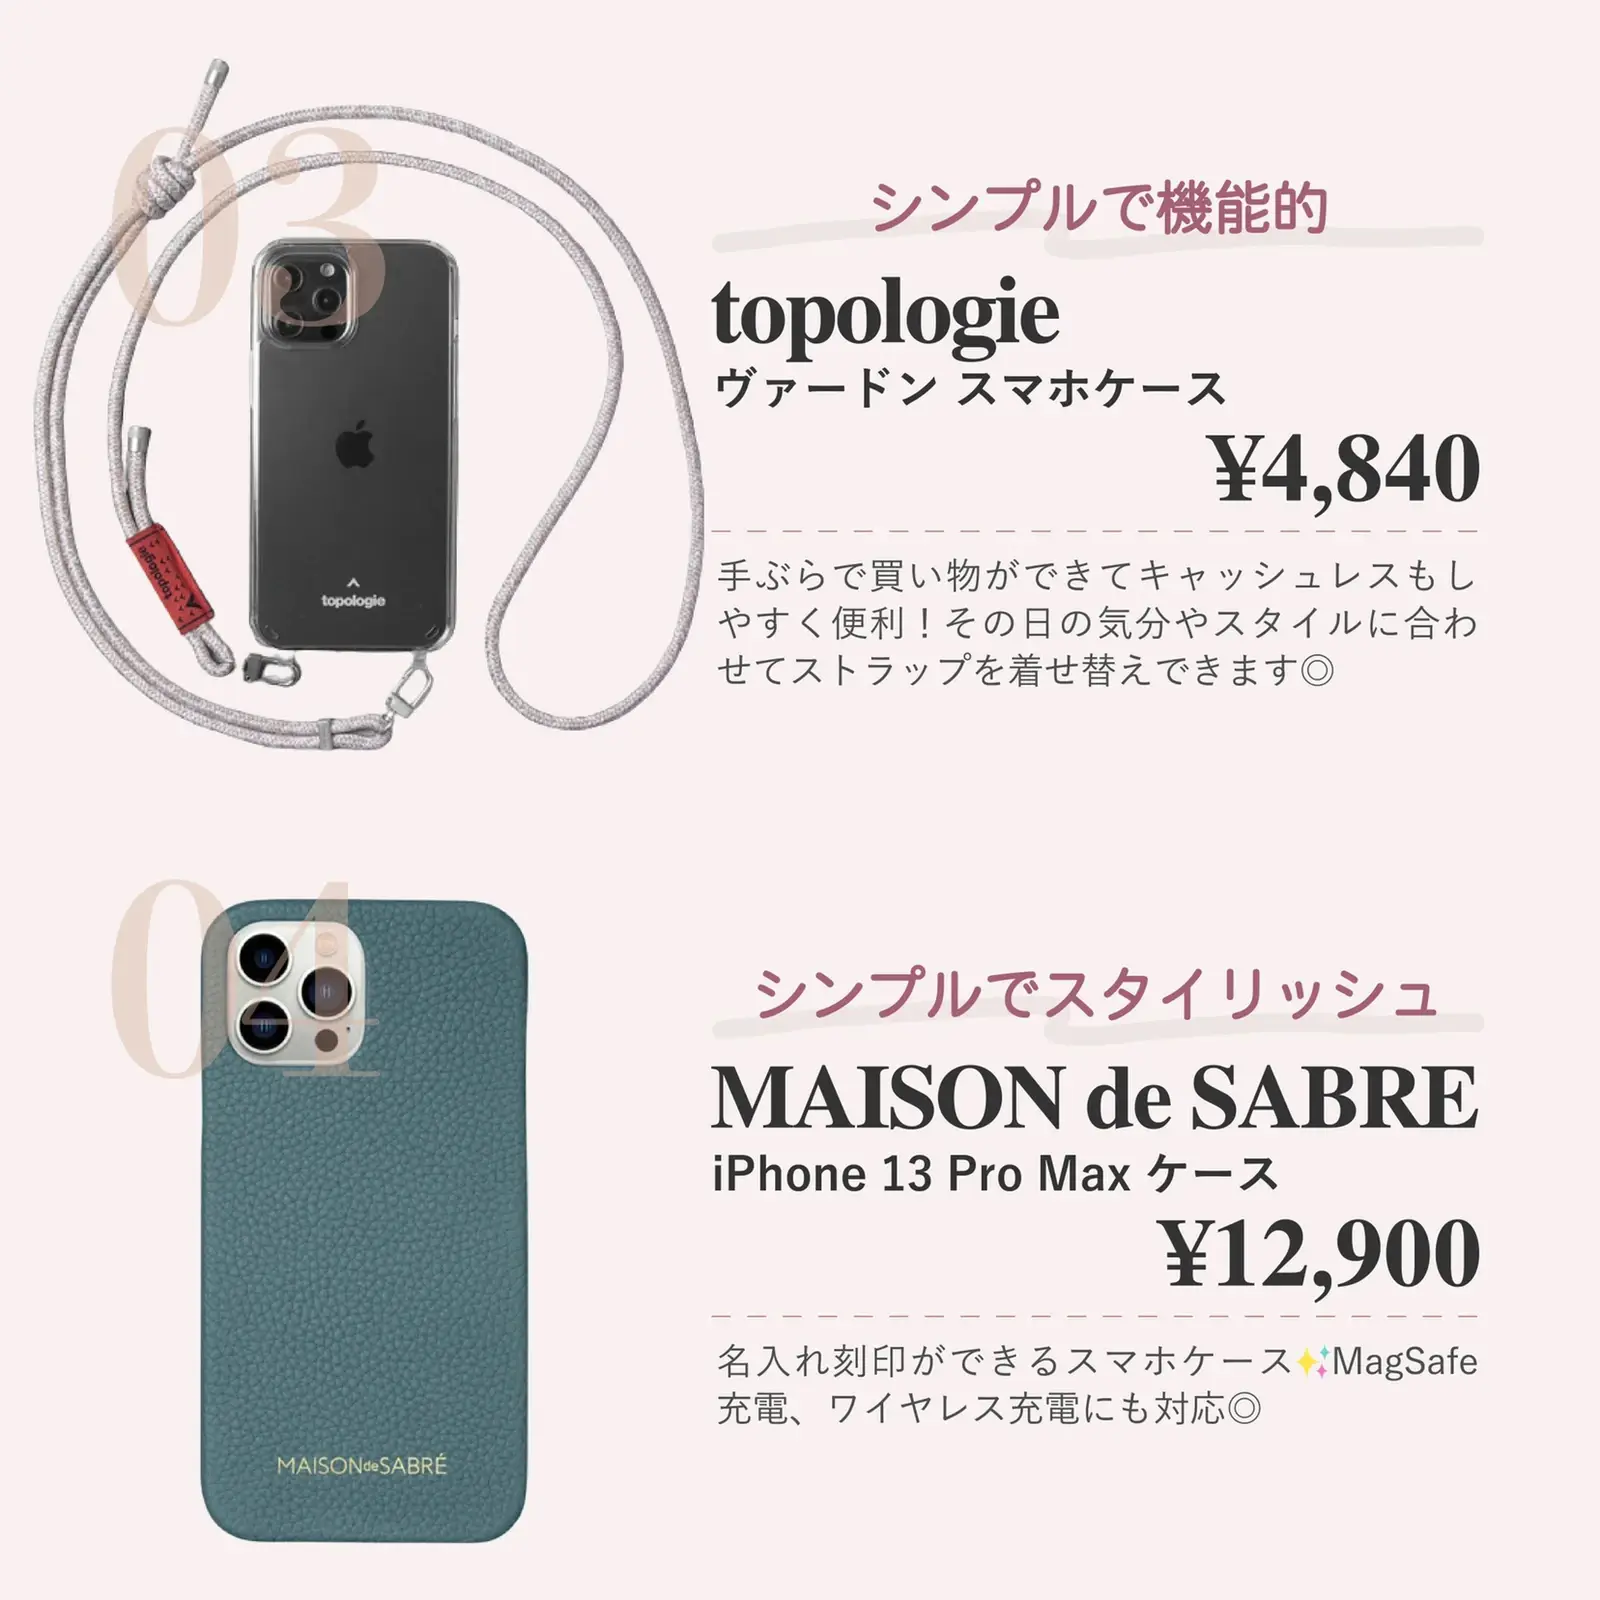 Iphone ケース - Lemon8検索